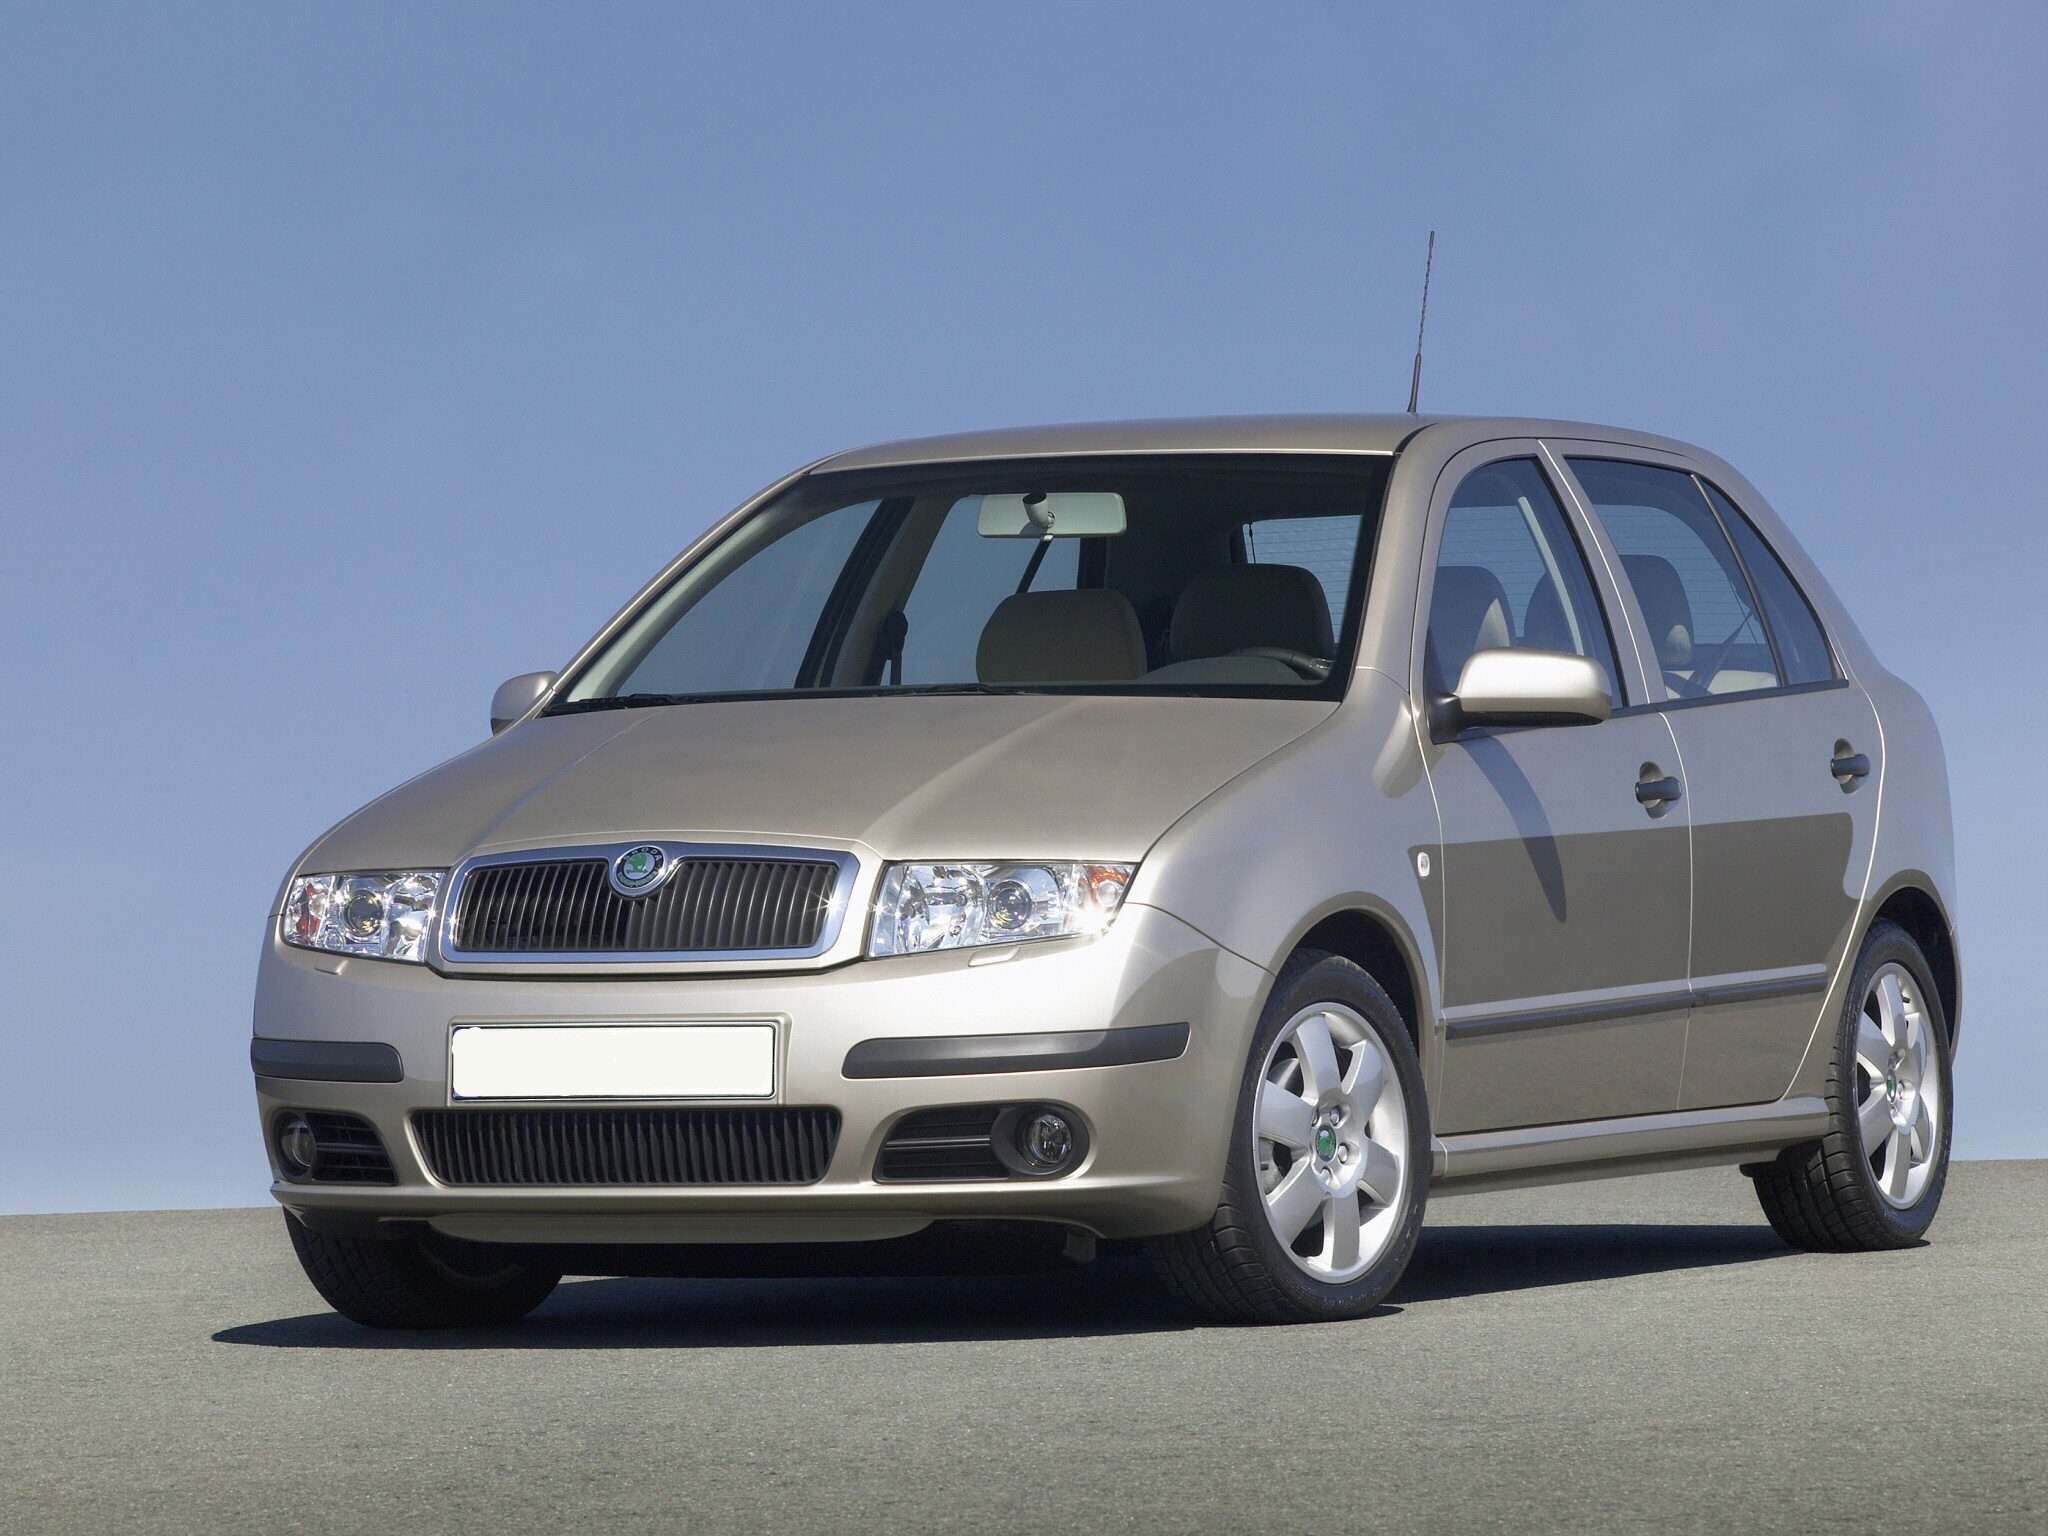 Recenzija Škoda Fabia (2000 - 2007) - prednosti i mane